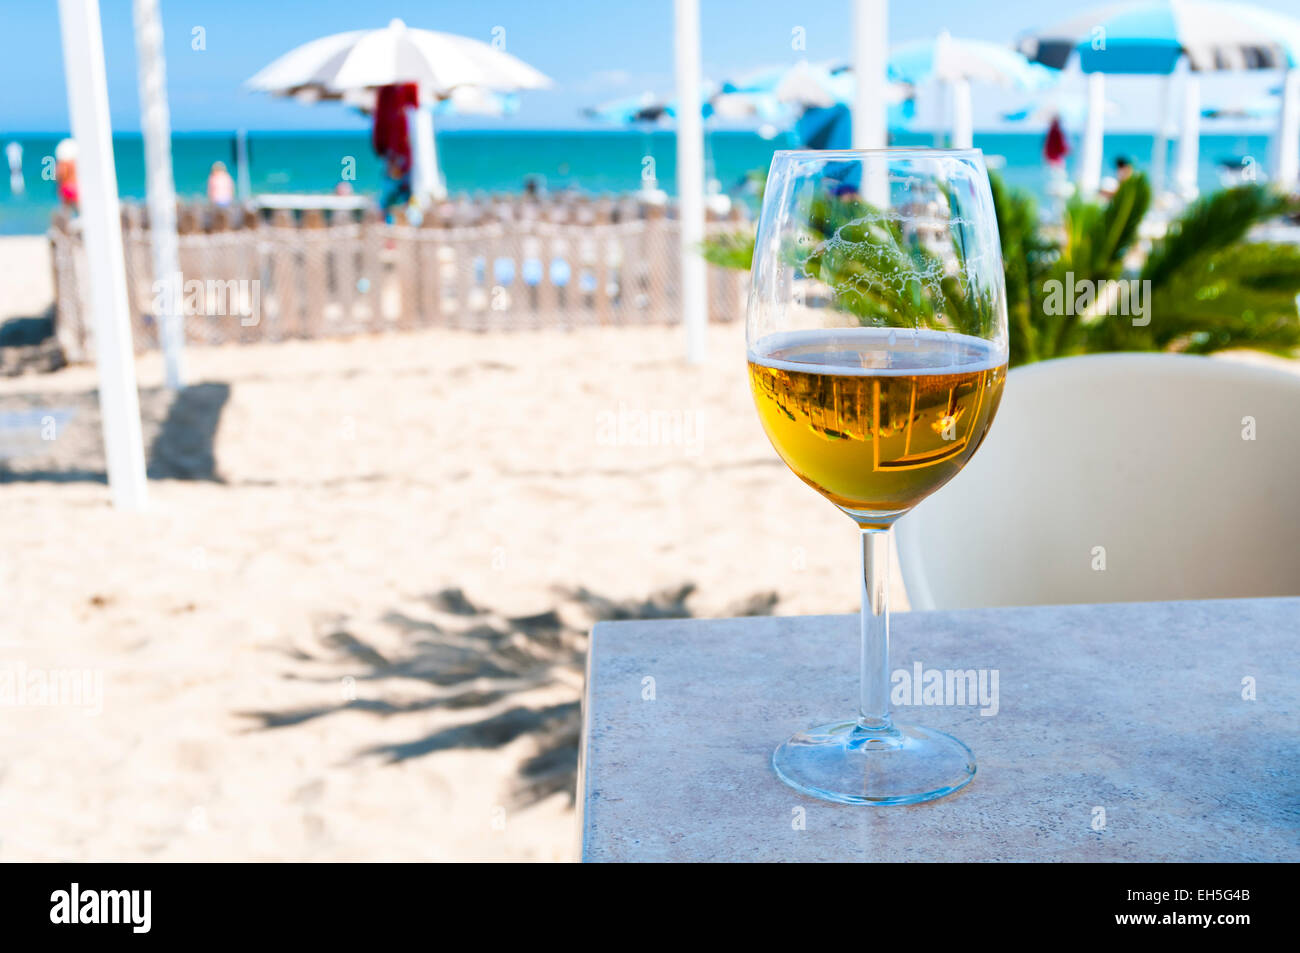 Half empty glass of beer in shadow on sandy beach Stock Photo